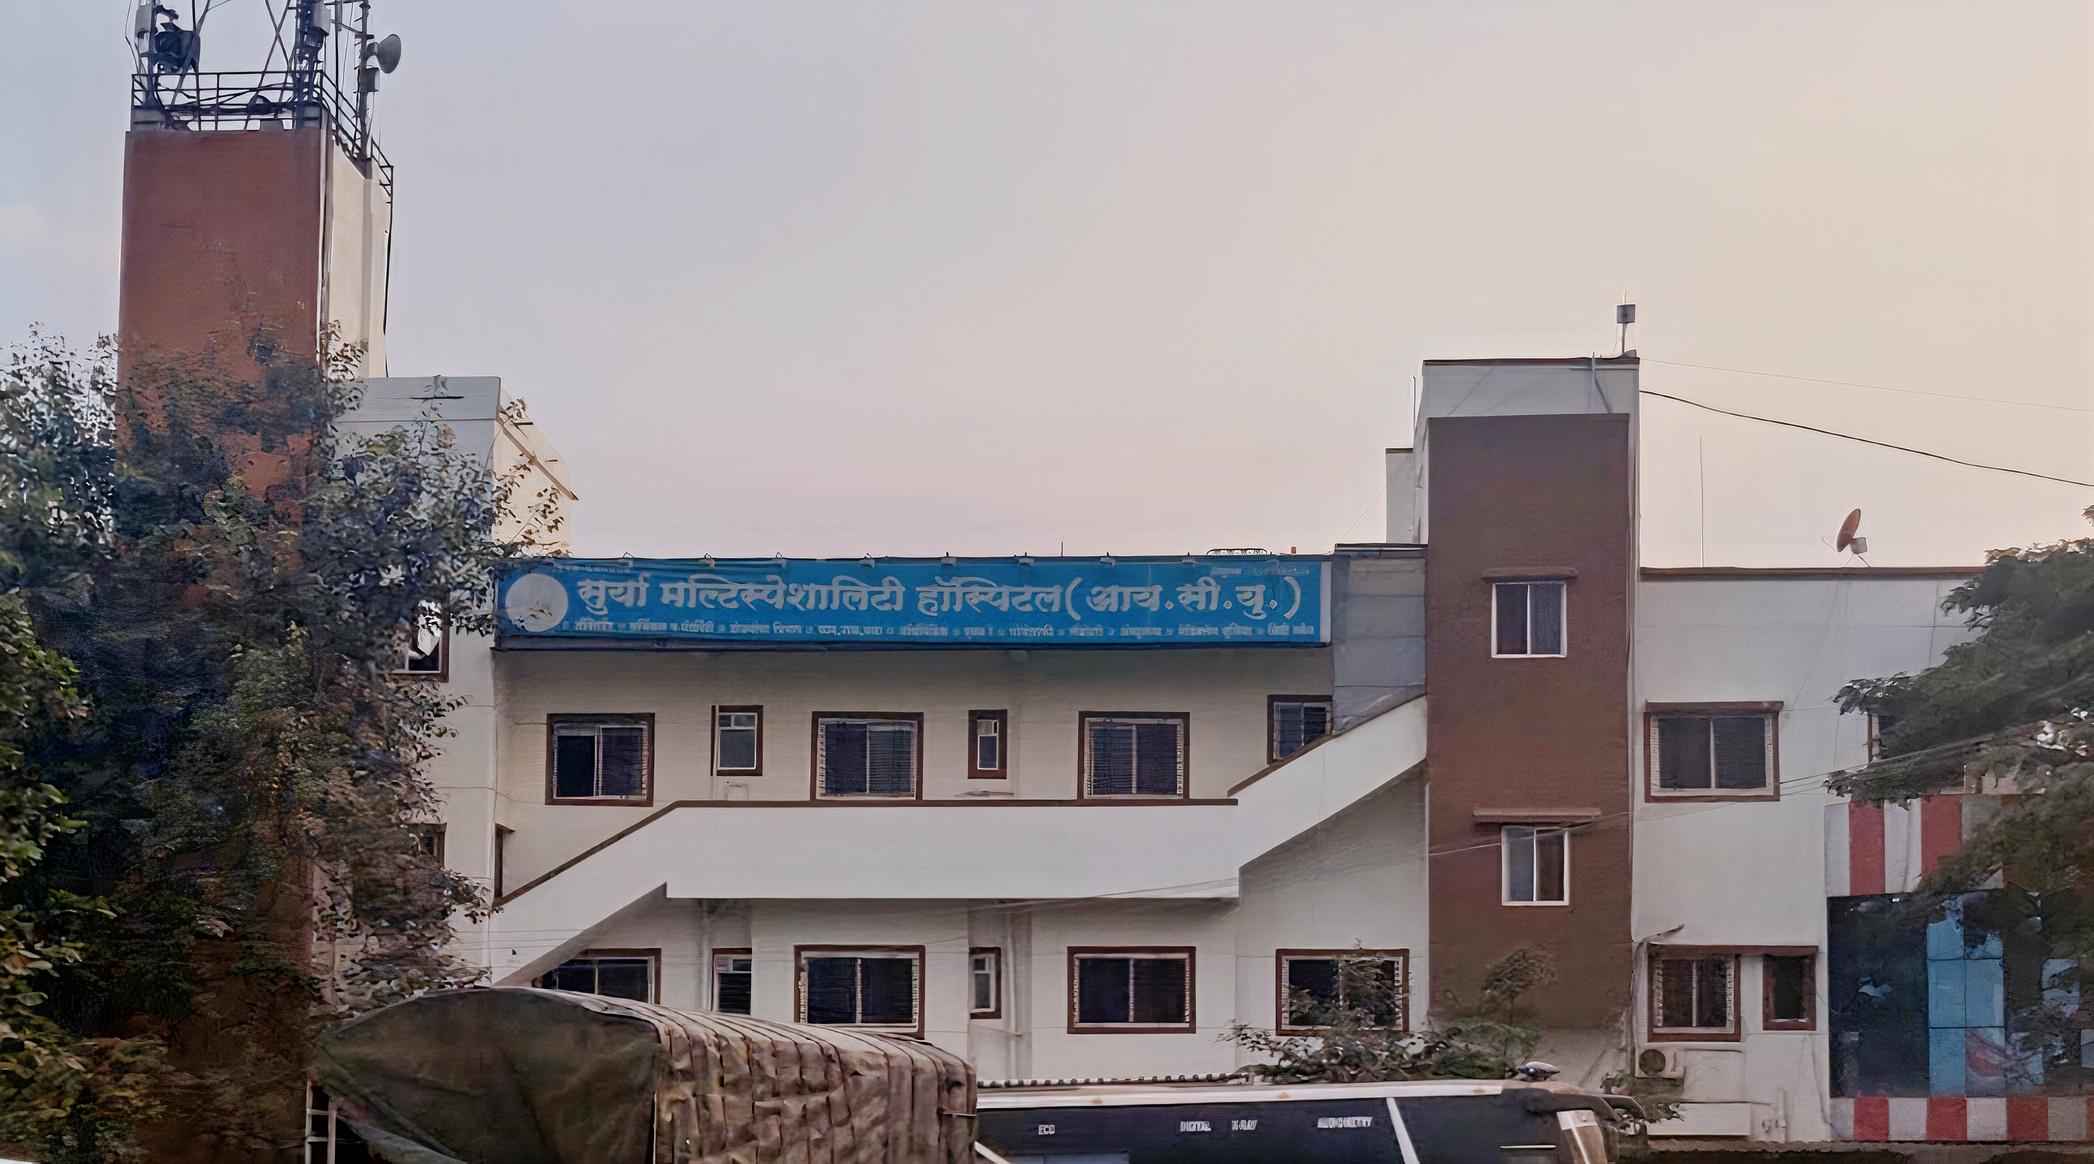 Surya Hospital